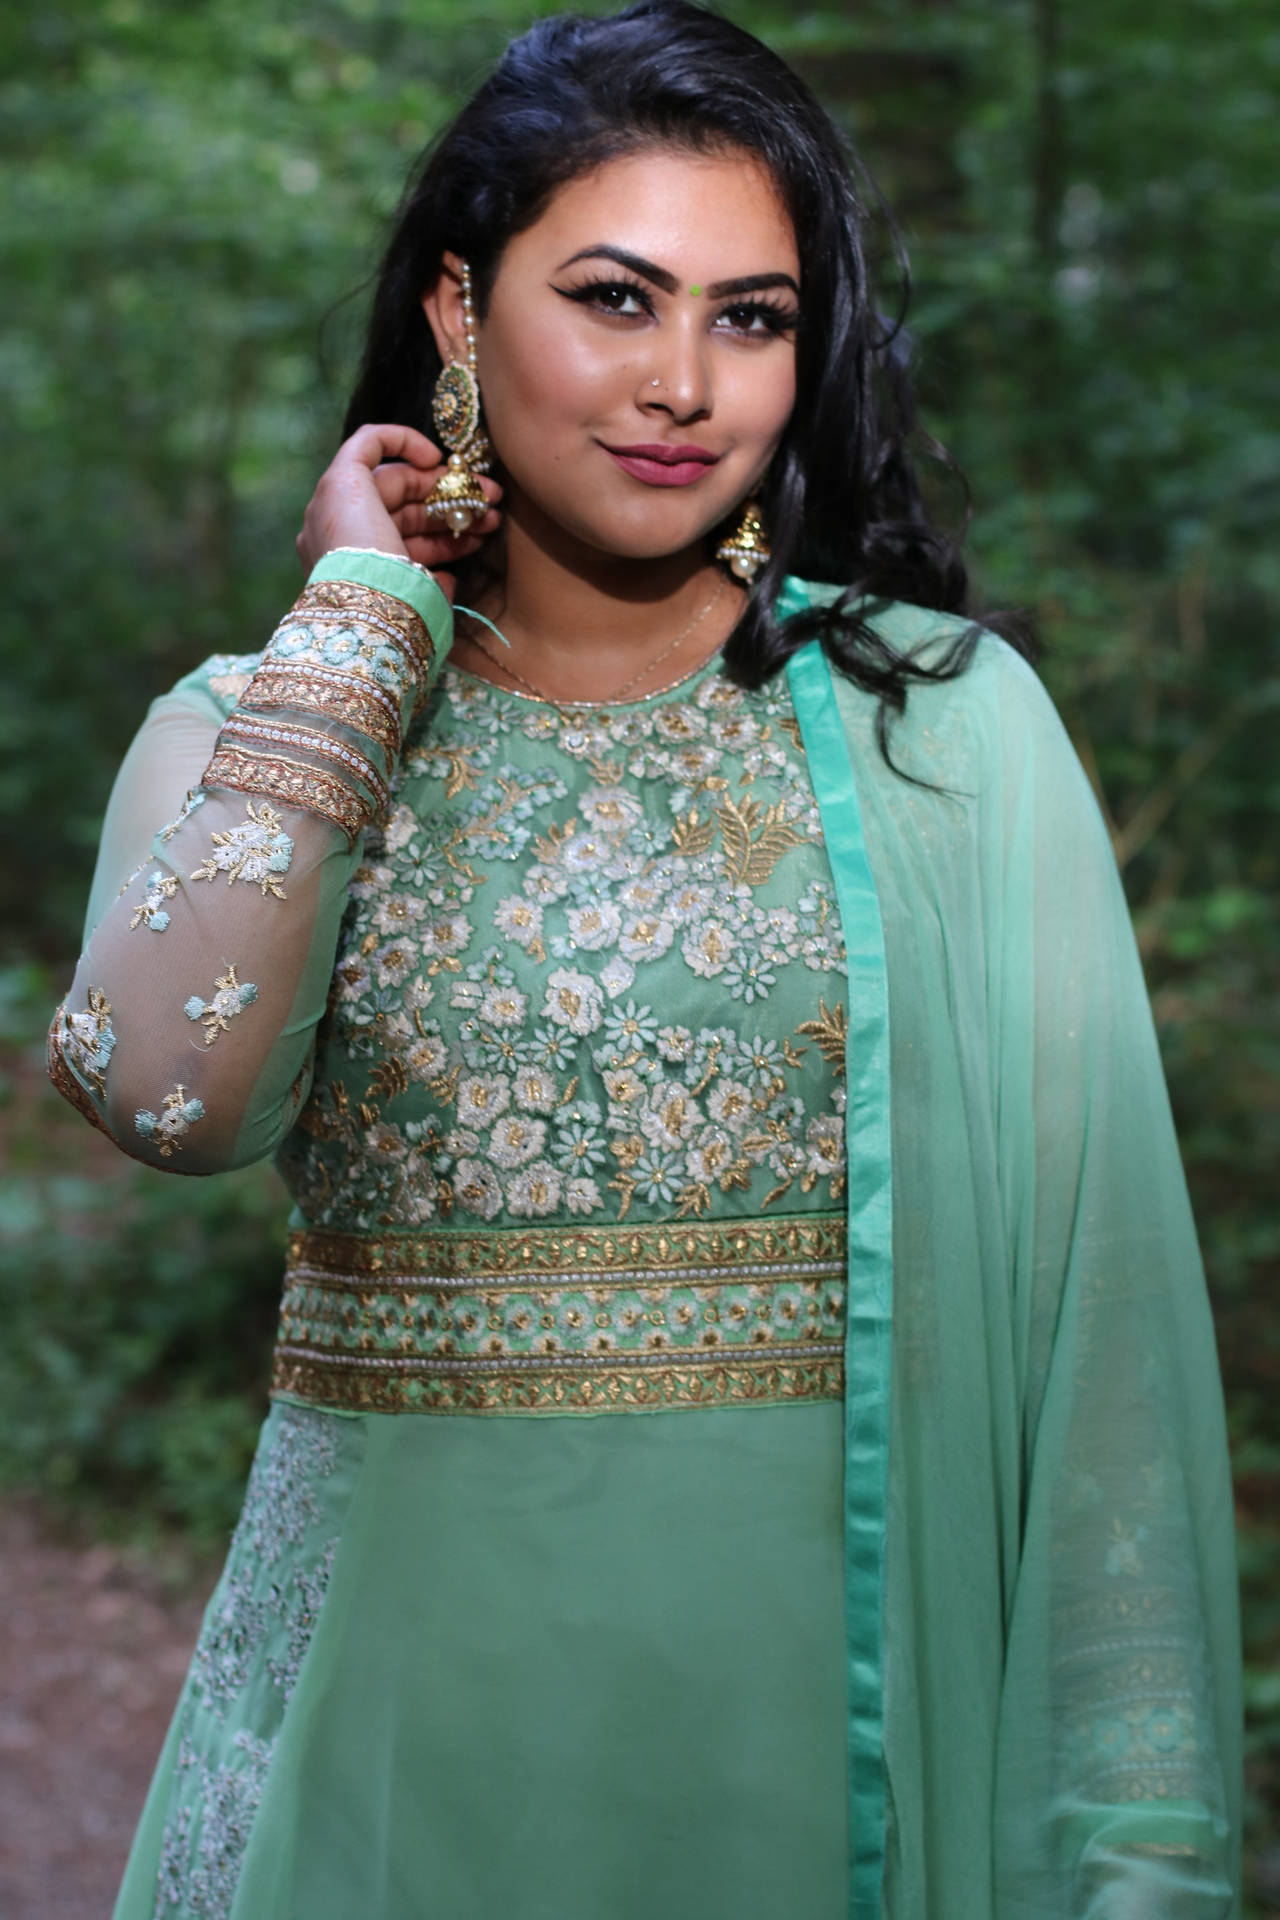 Asian Woman Wearing Traditional Saree Dress